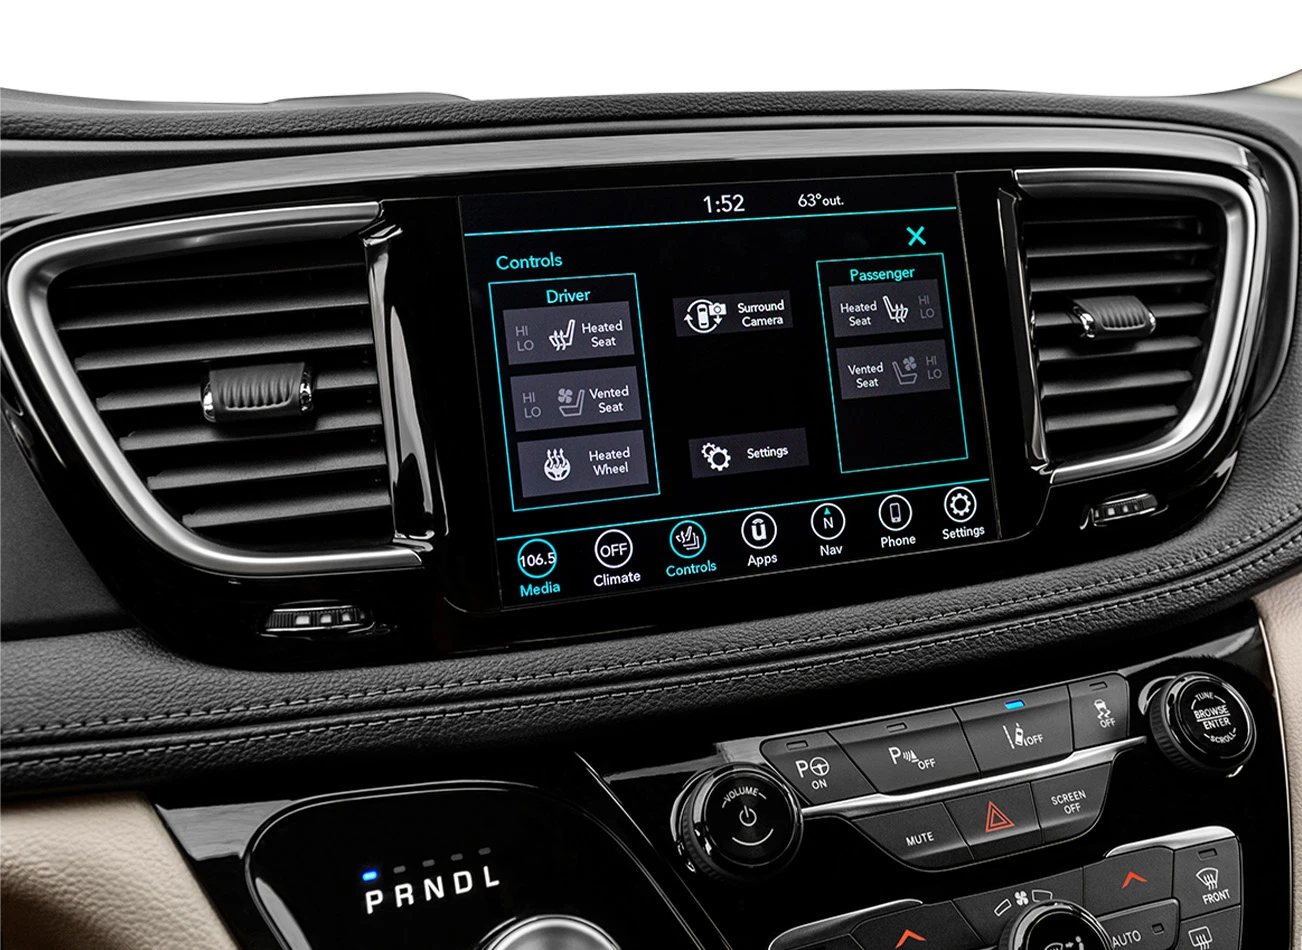 2020 Chrysler Pacifica: Dashboard | CarMax